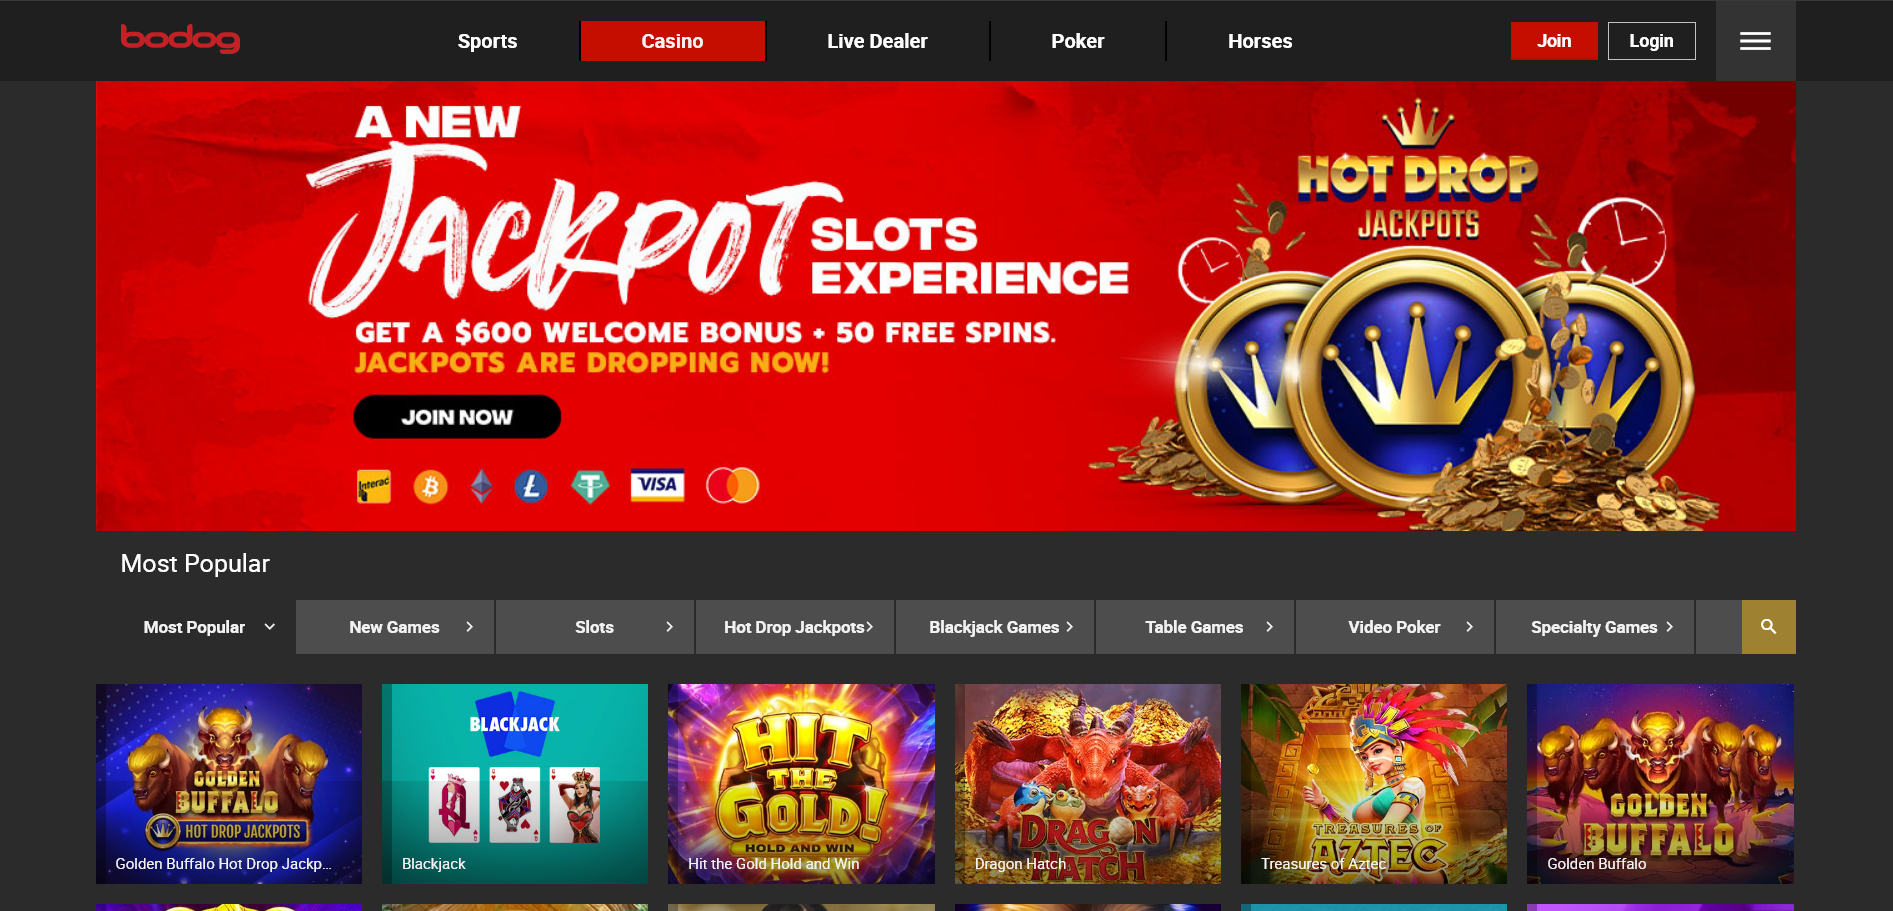 The Best Online Casinos In Canada - Bodog Casino Games